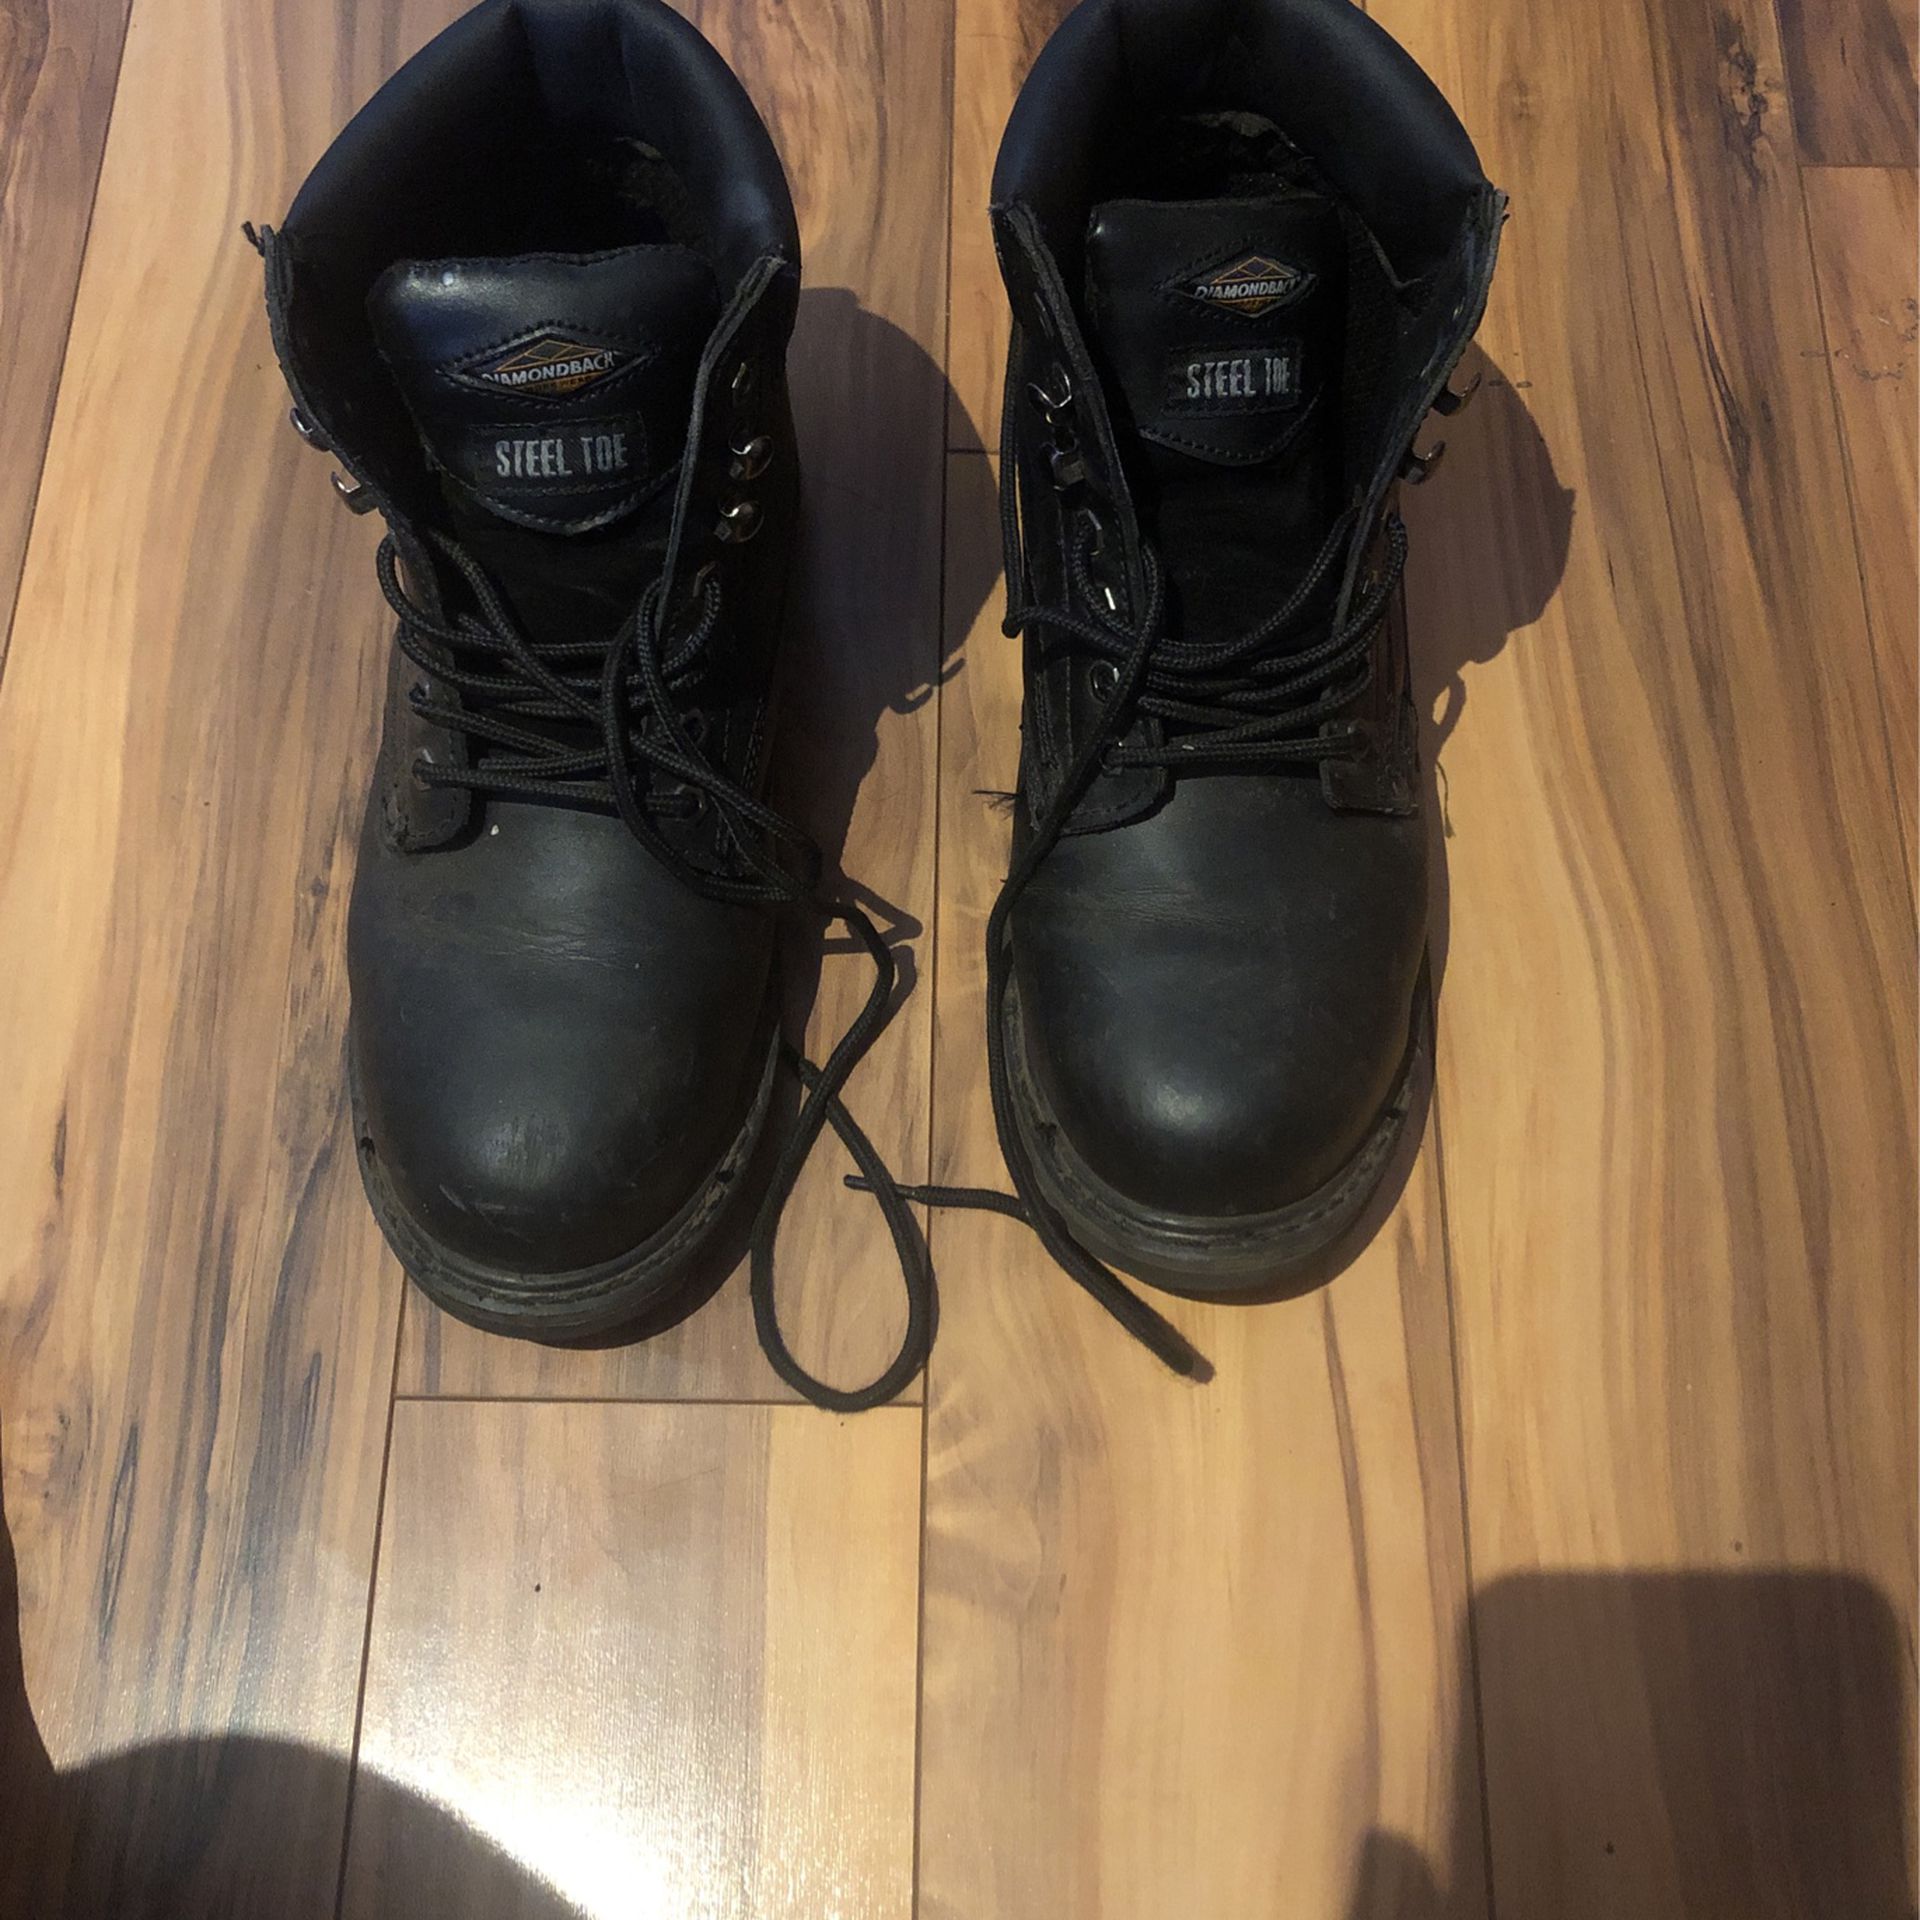 steel toe black work boots size 9.5 men’s